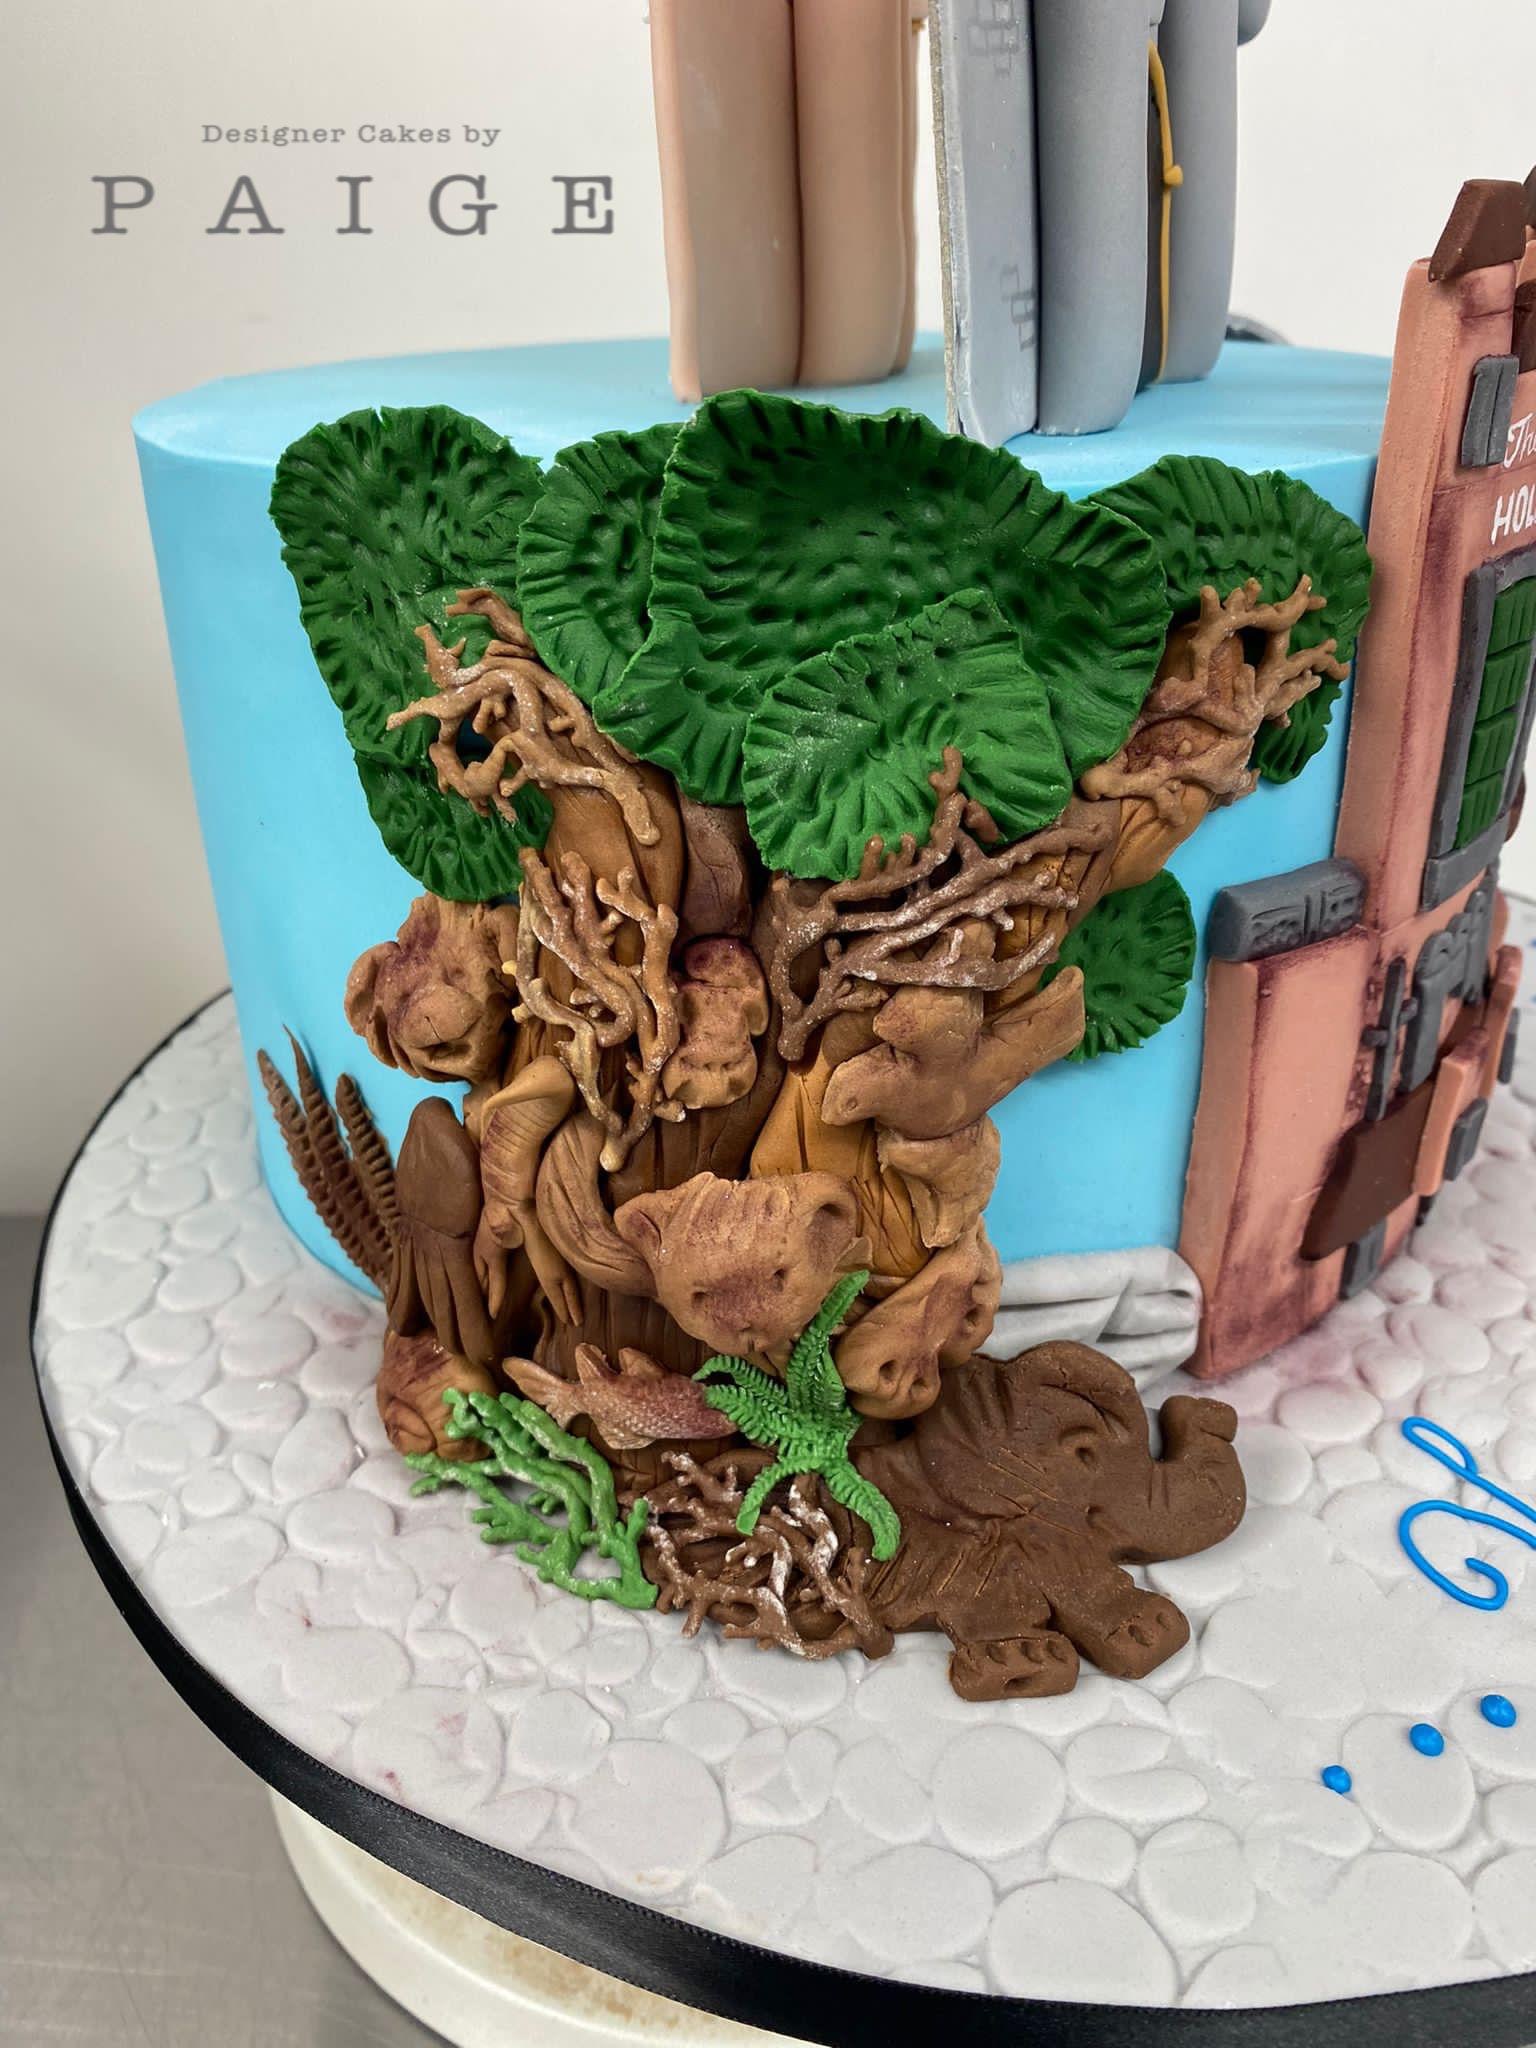 Disney World - Designer Cakes by Paige